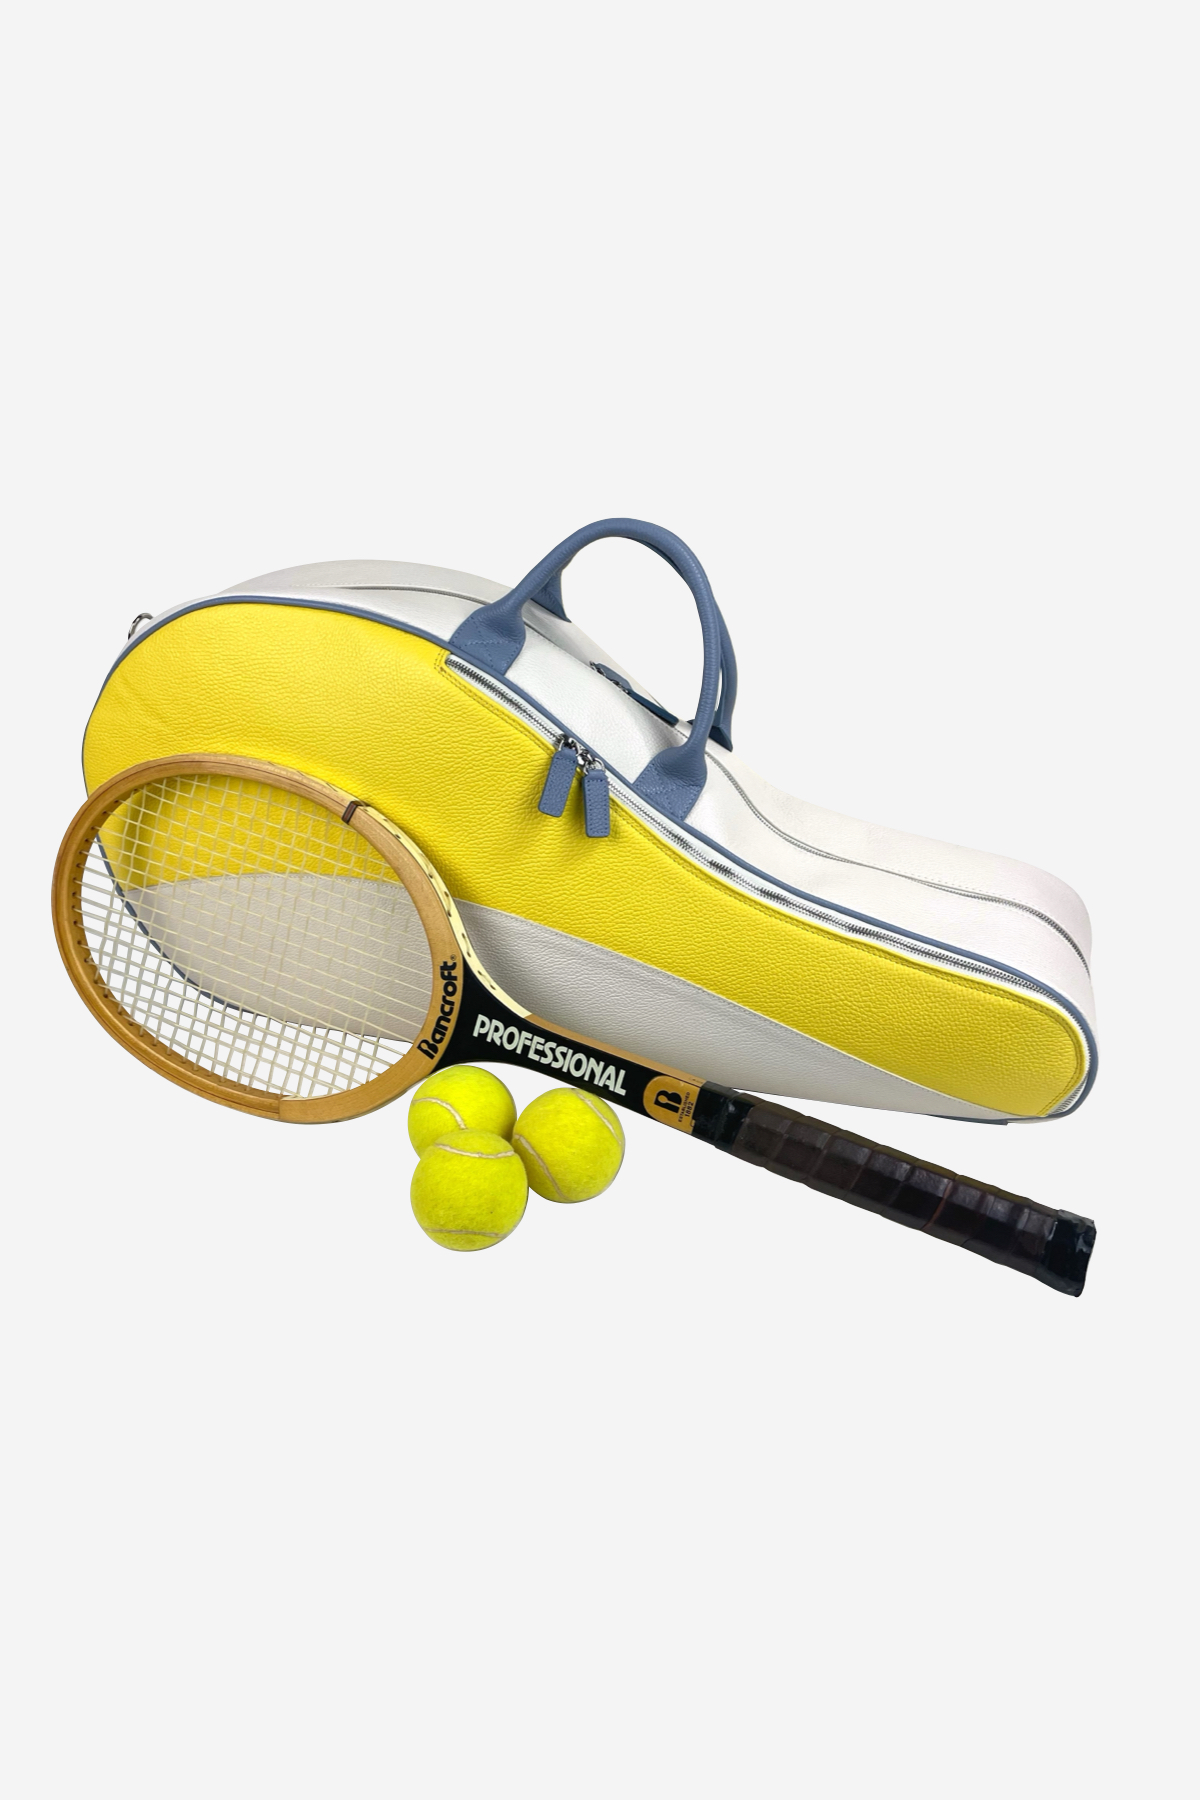 Luxury Cortiglia Tennis Bags - The Life of Luxury